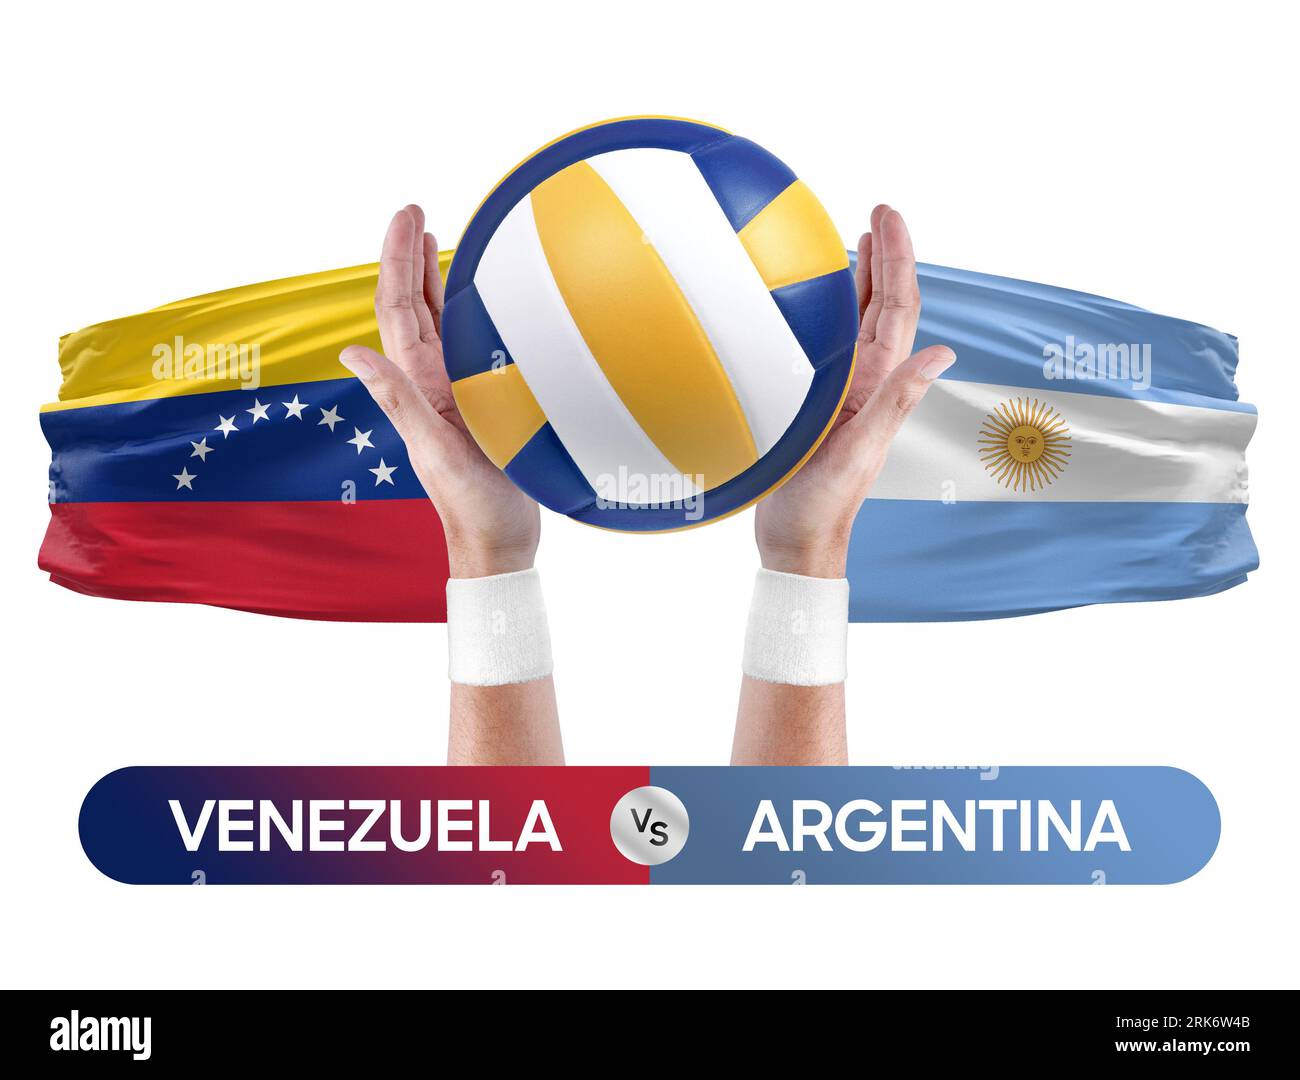 Venezuela gegen Argentinien Nationalmannschaften Volleyball Volleyball Volleyball Match Competition Concept. Stockfoto